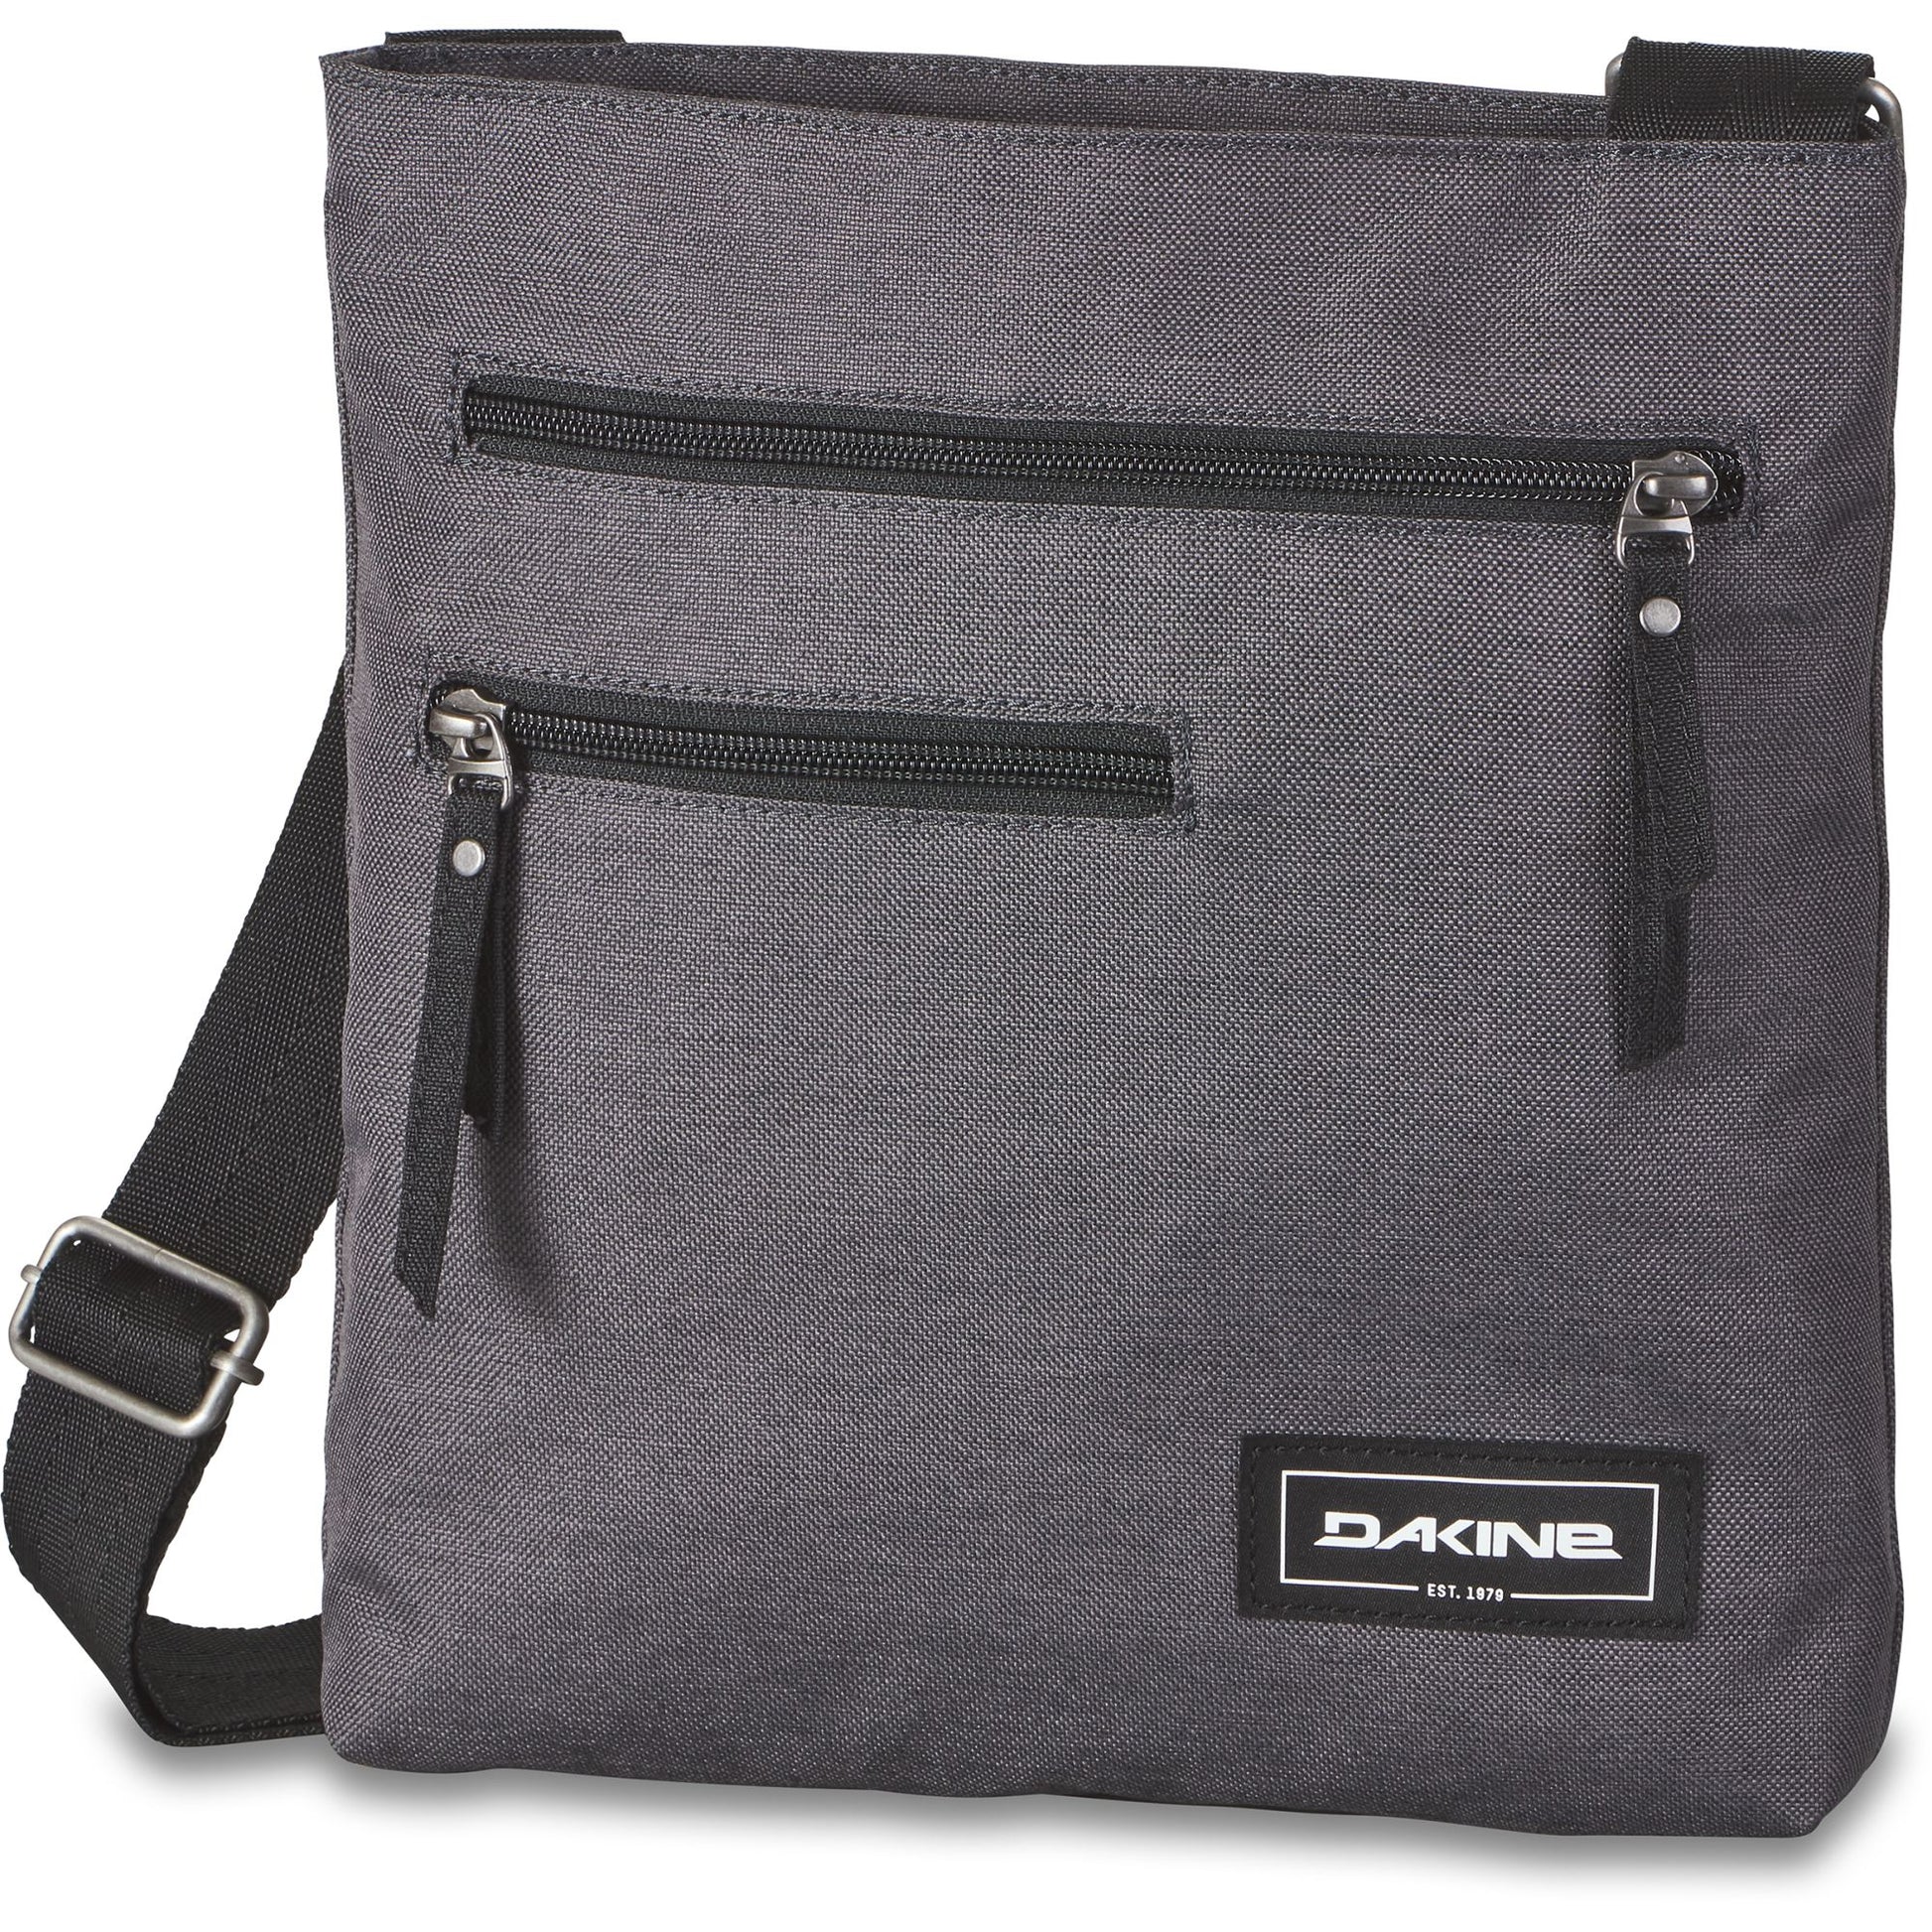 Dakine Jo Jo Bag Geyser Grey OS Bags & Packs